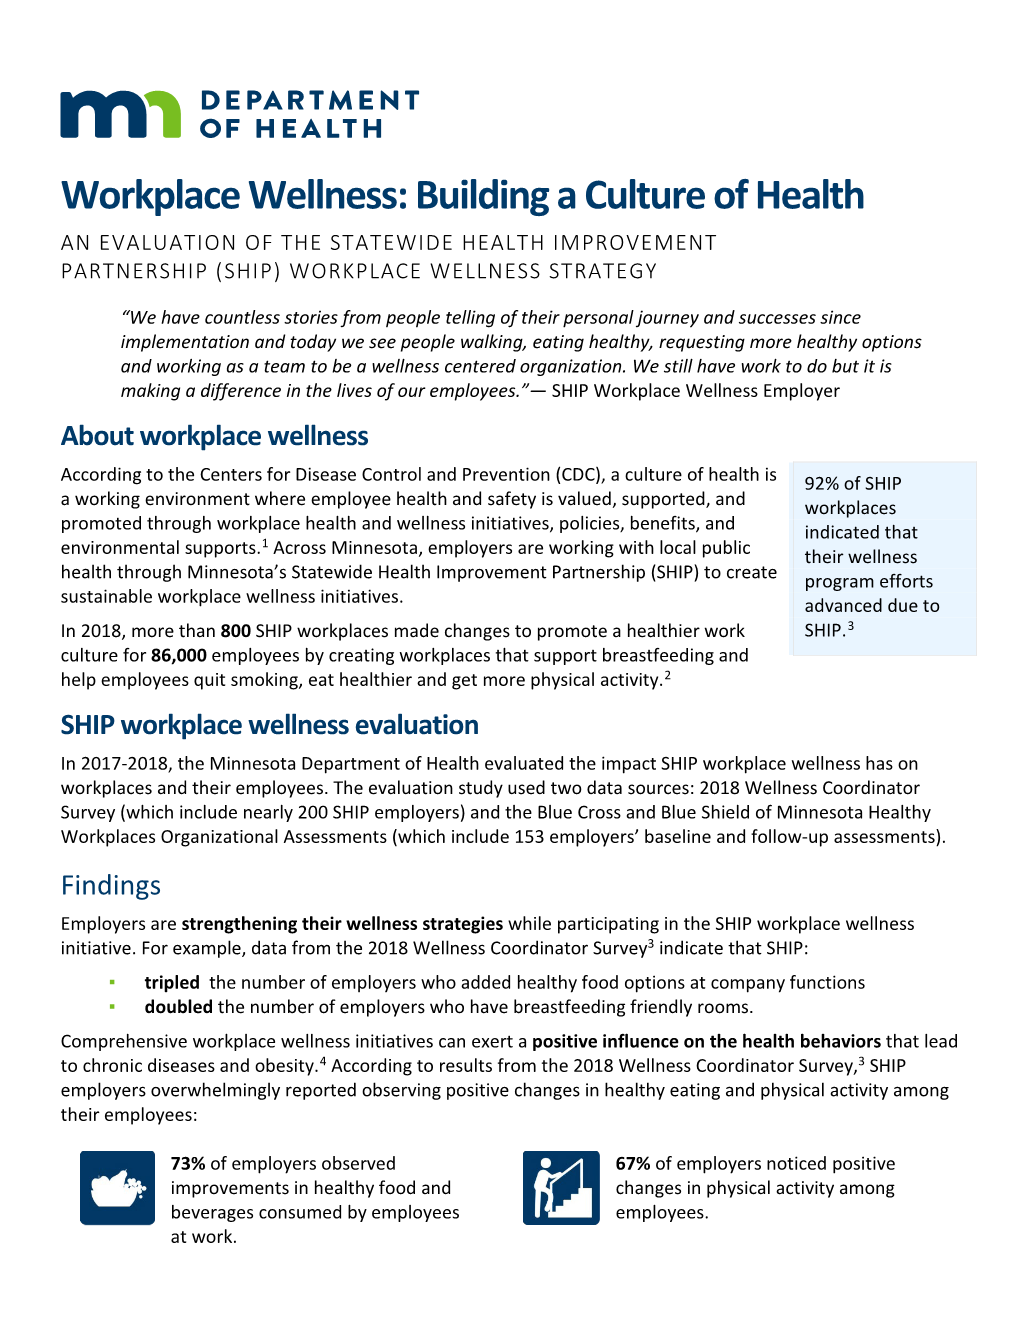 SHIP Workplace Wellness Evaluation Fact Sheet